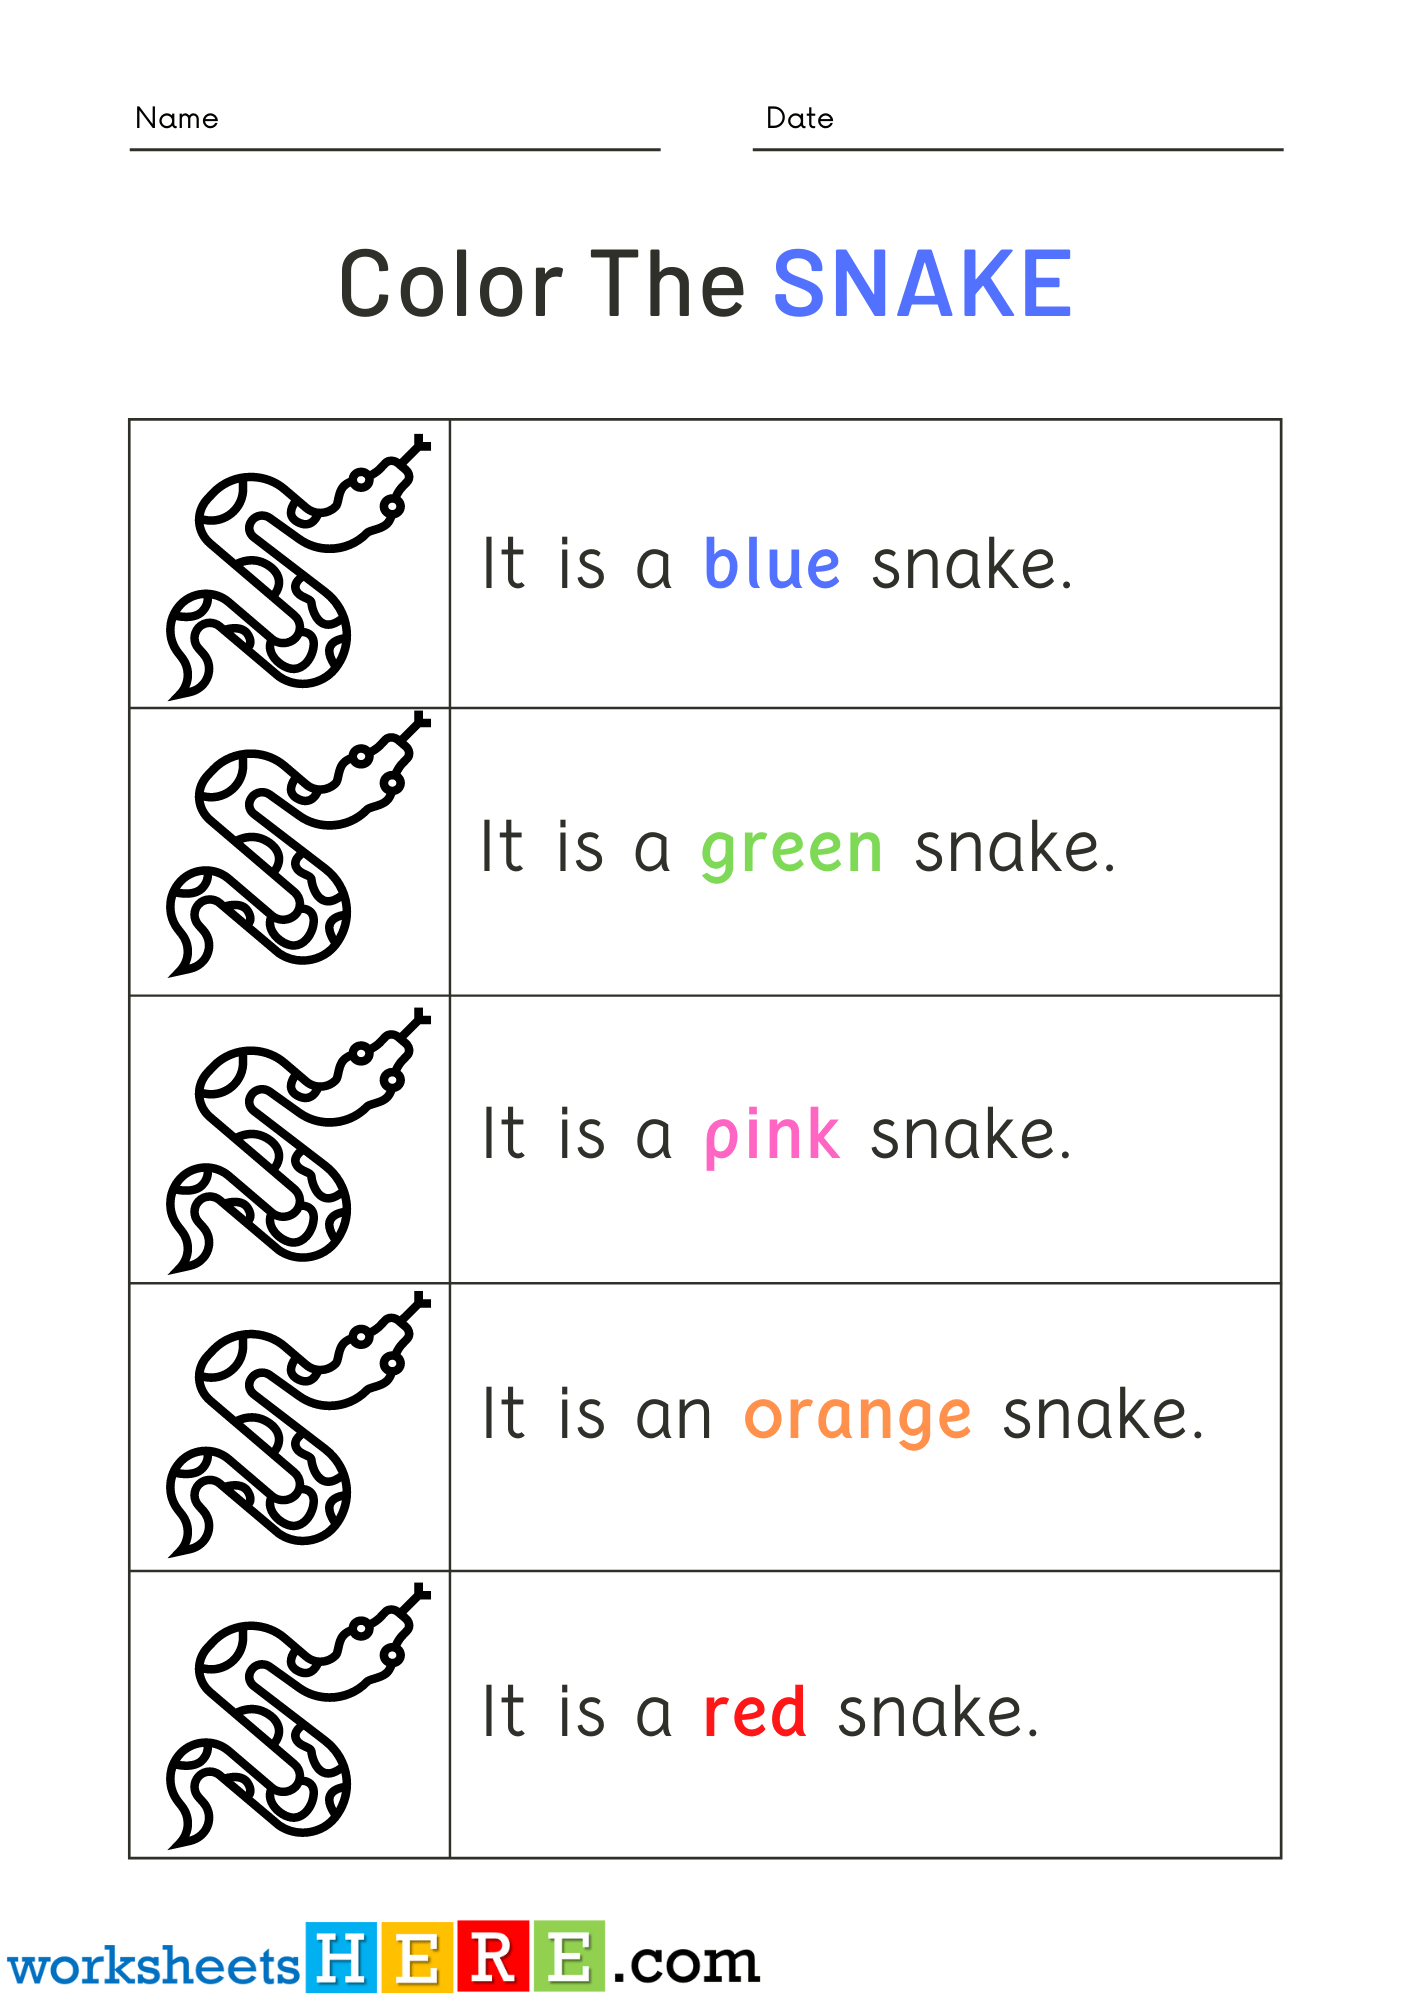 Read Words and Color Snake Pictures Activity PDF Worksheets For Kindergarten